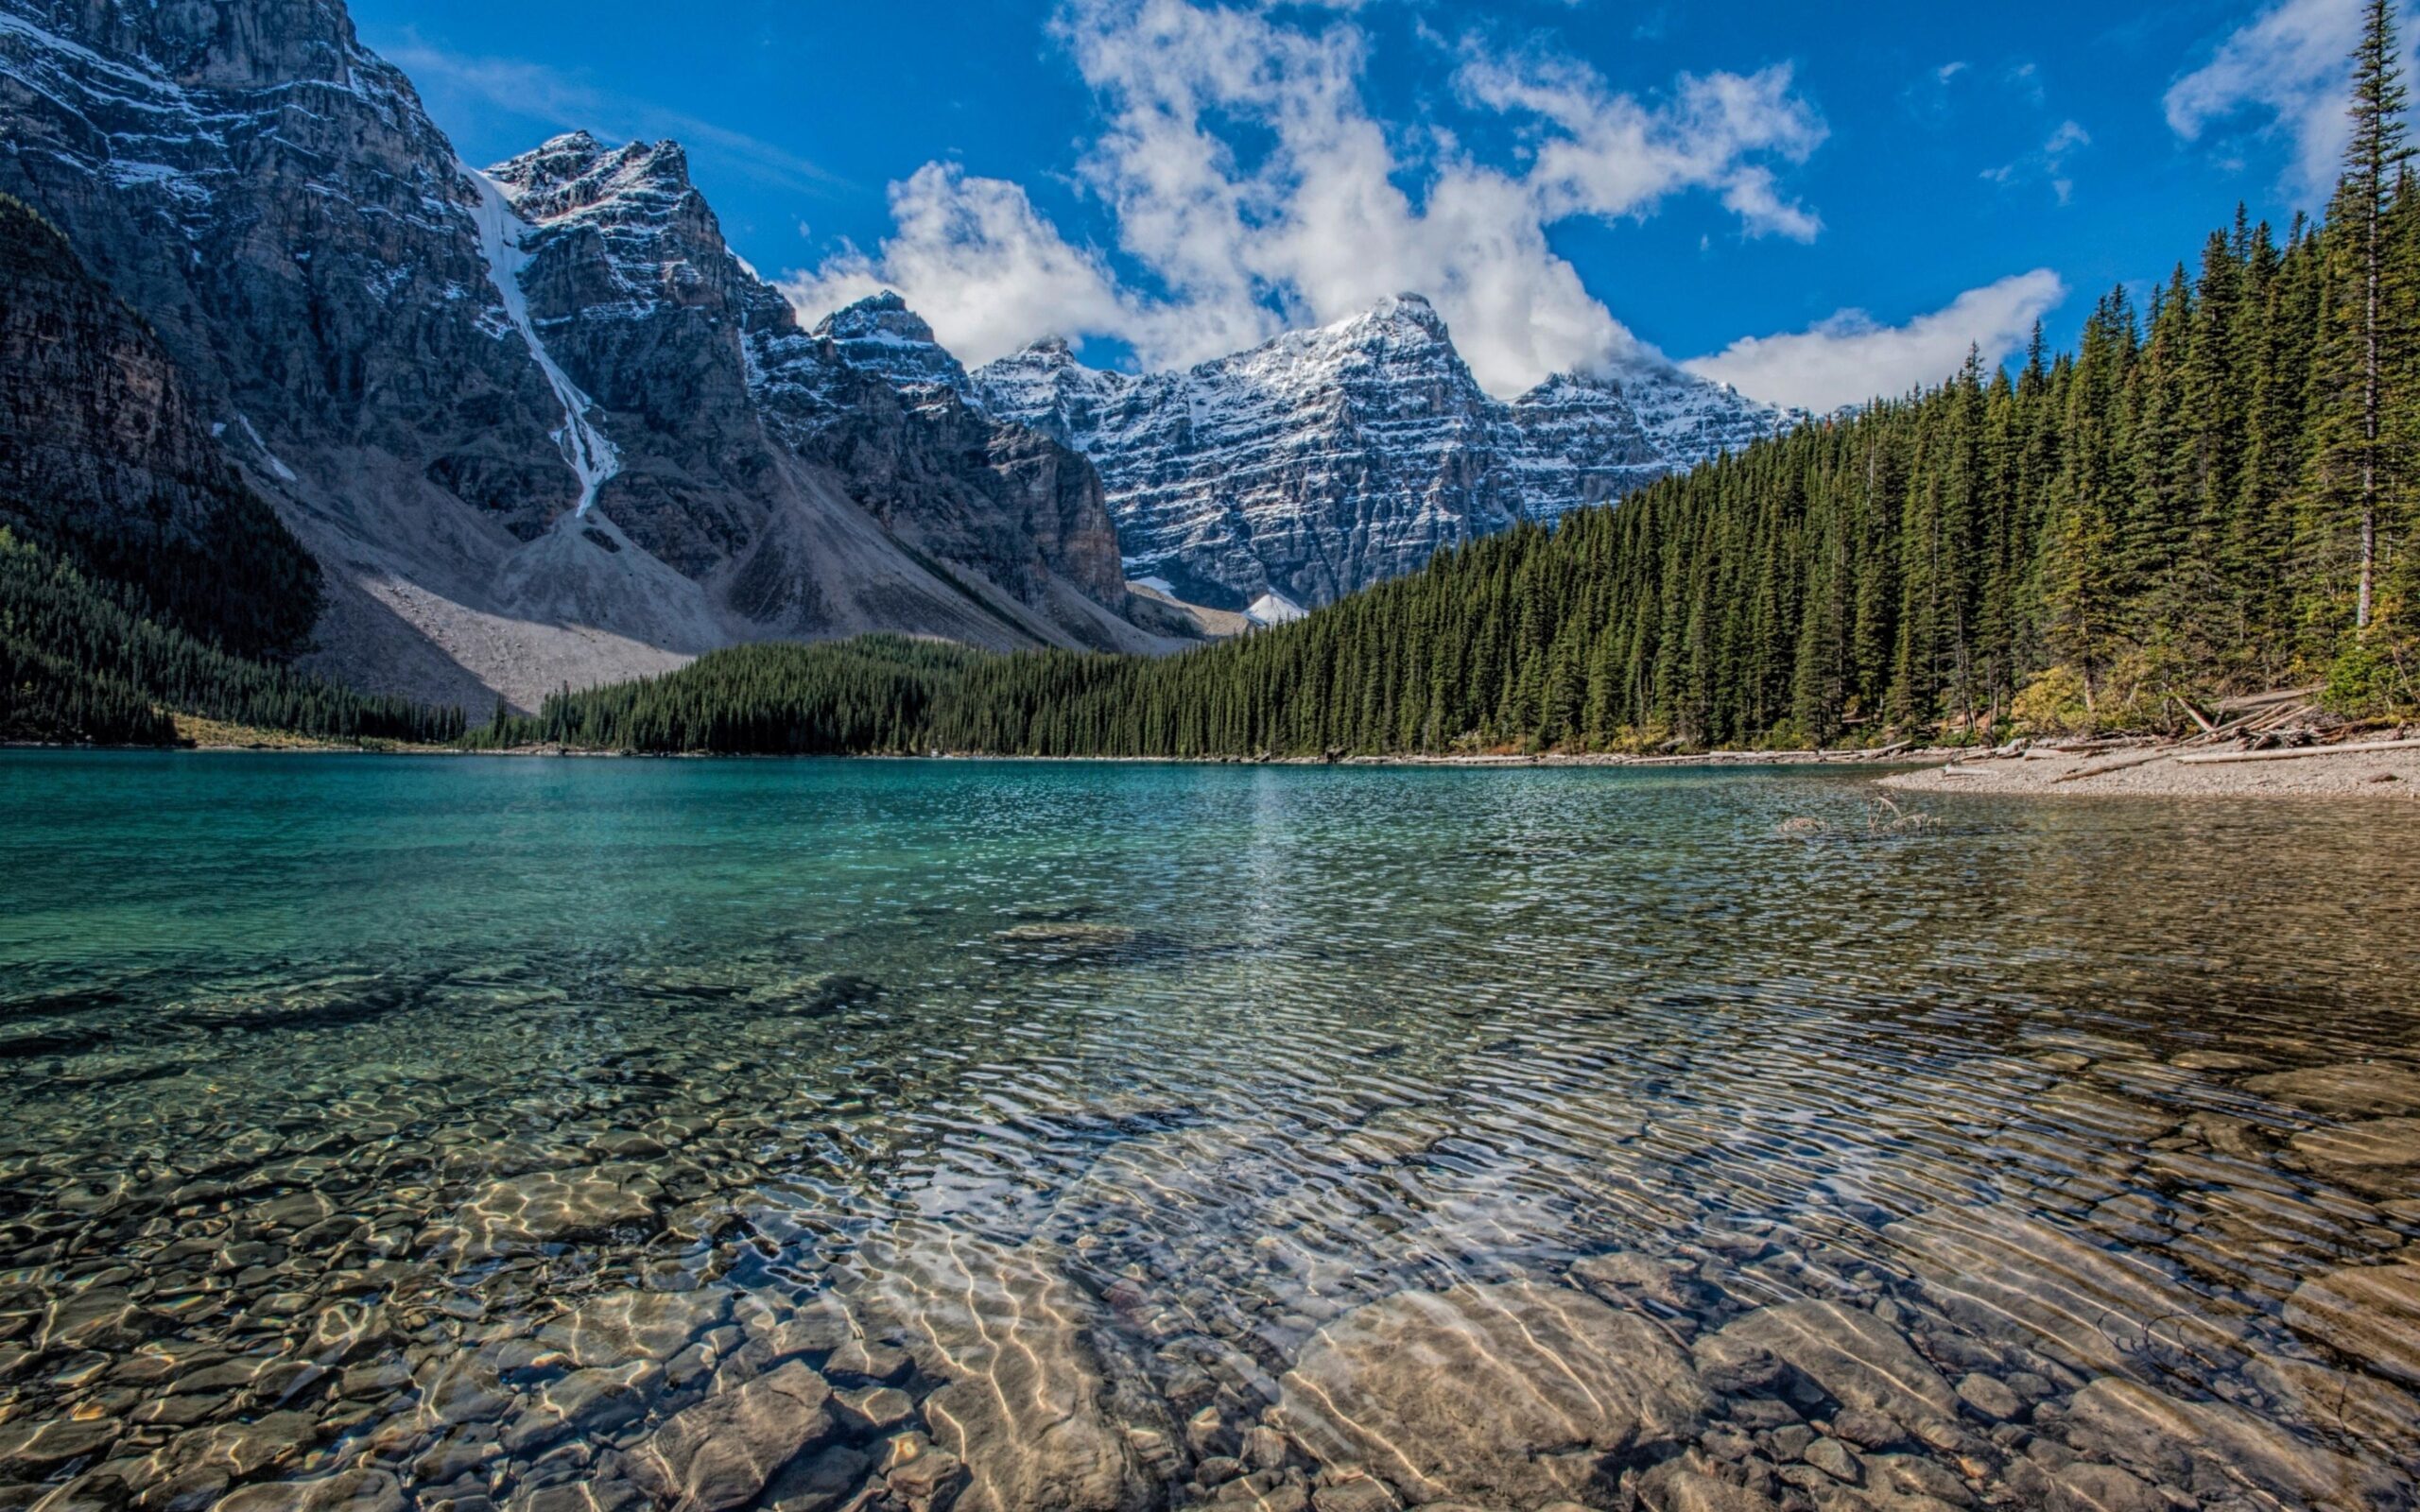 Download wallpapers clean lake, mountains range, trees